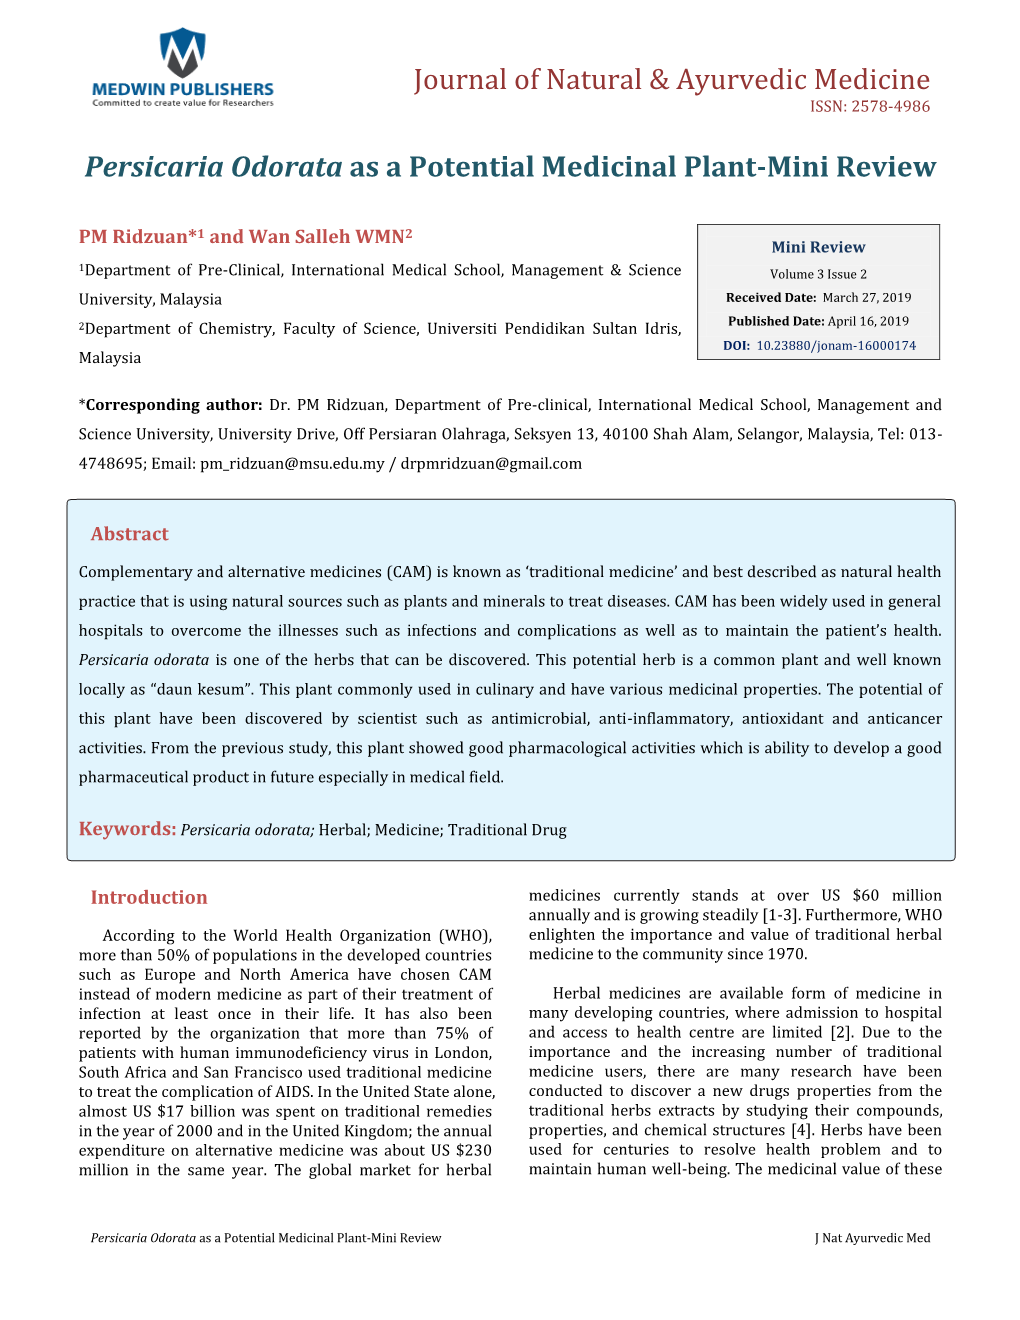 Persicaria Odorata As a Potential Medicinal Plant-Mini Review